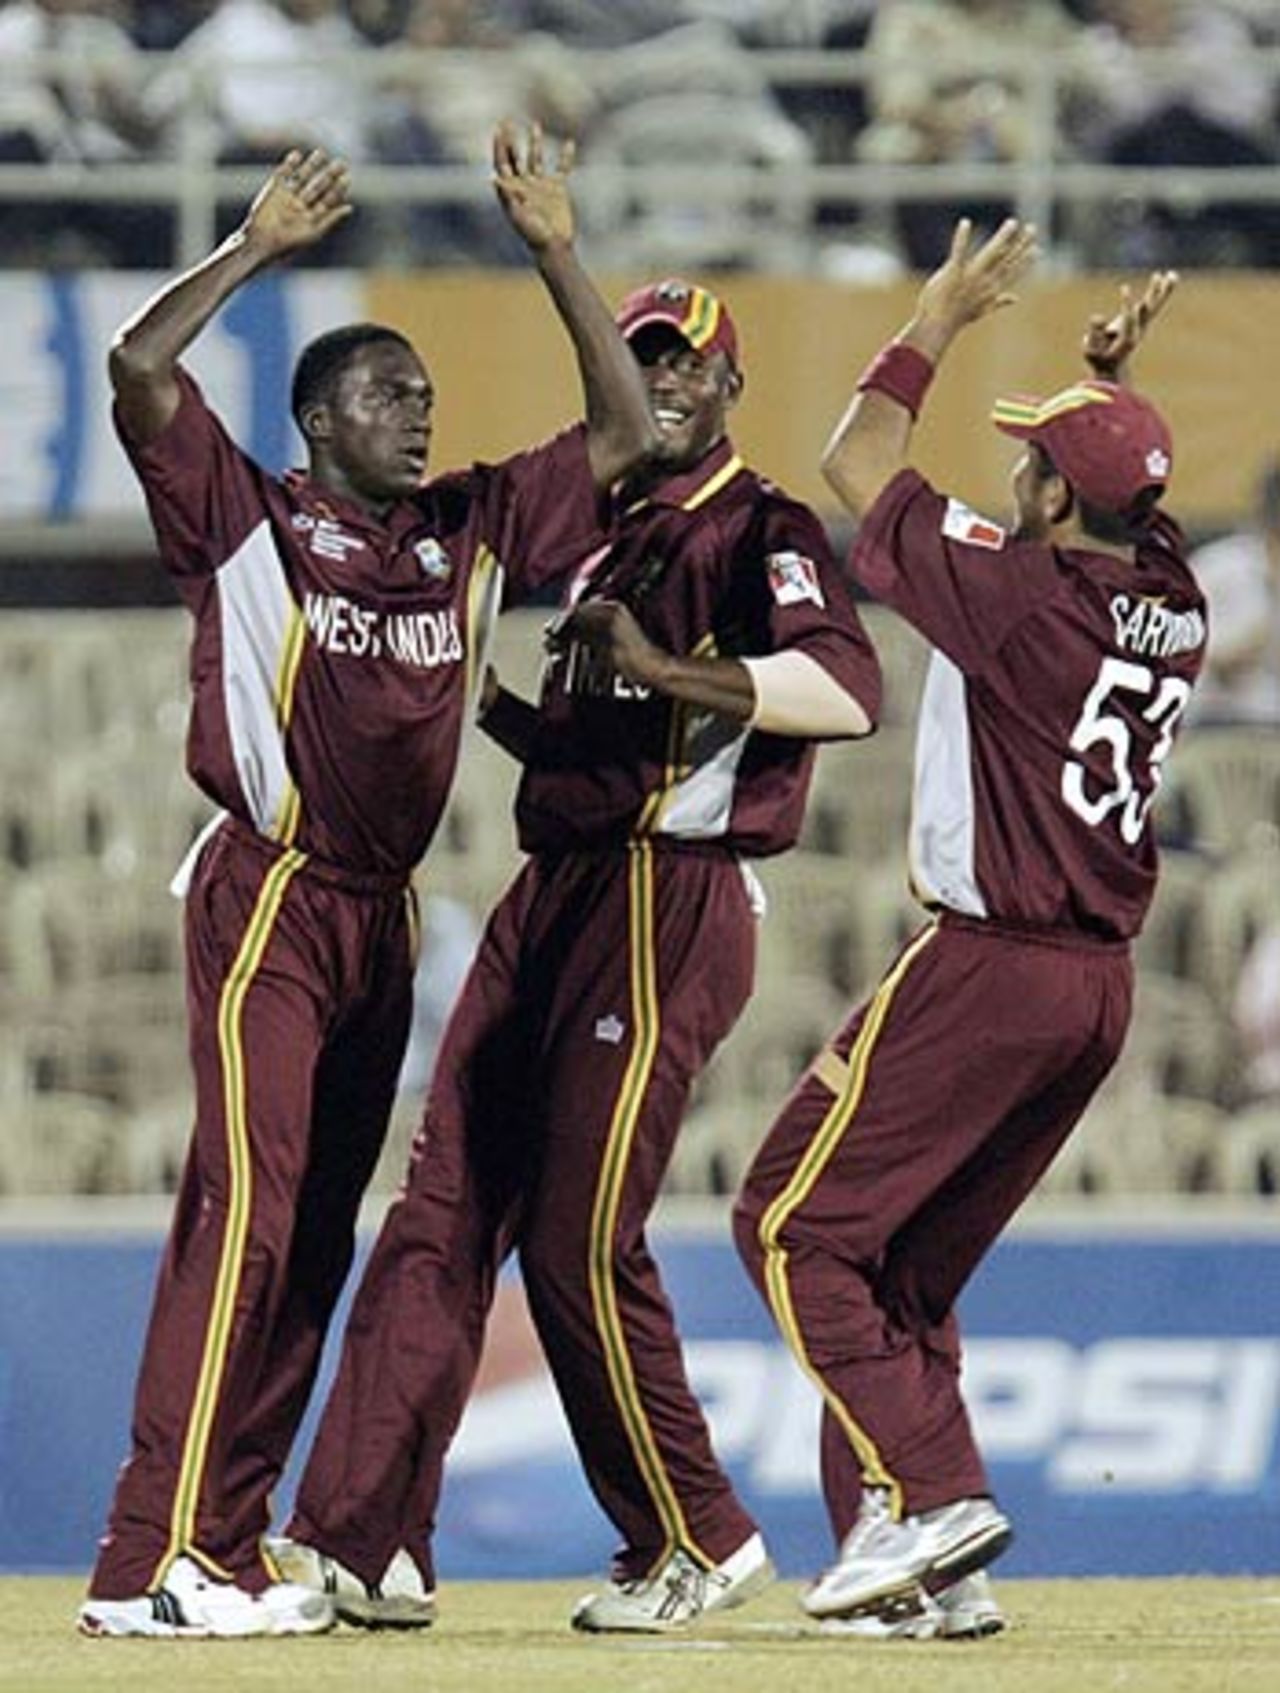 West Indies celebrate a strike, Australia v West Indies, 4th match, Mumbai, October 18, 2006